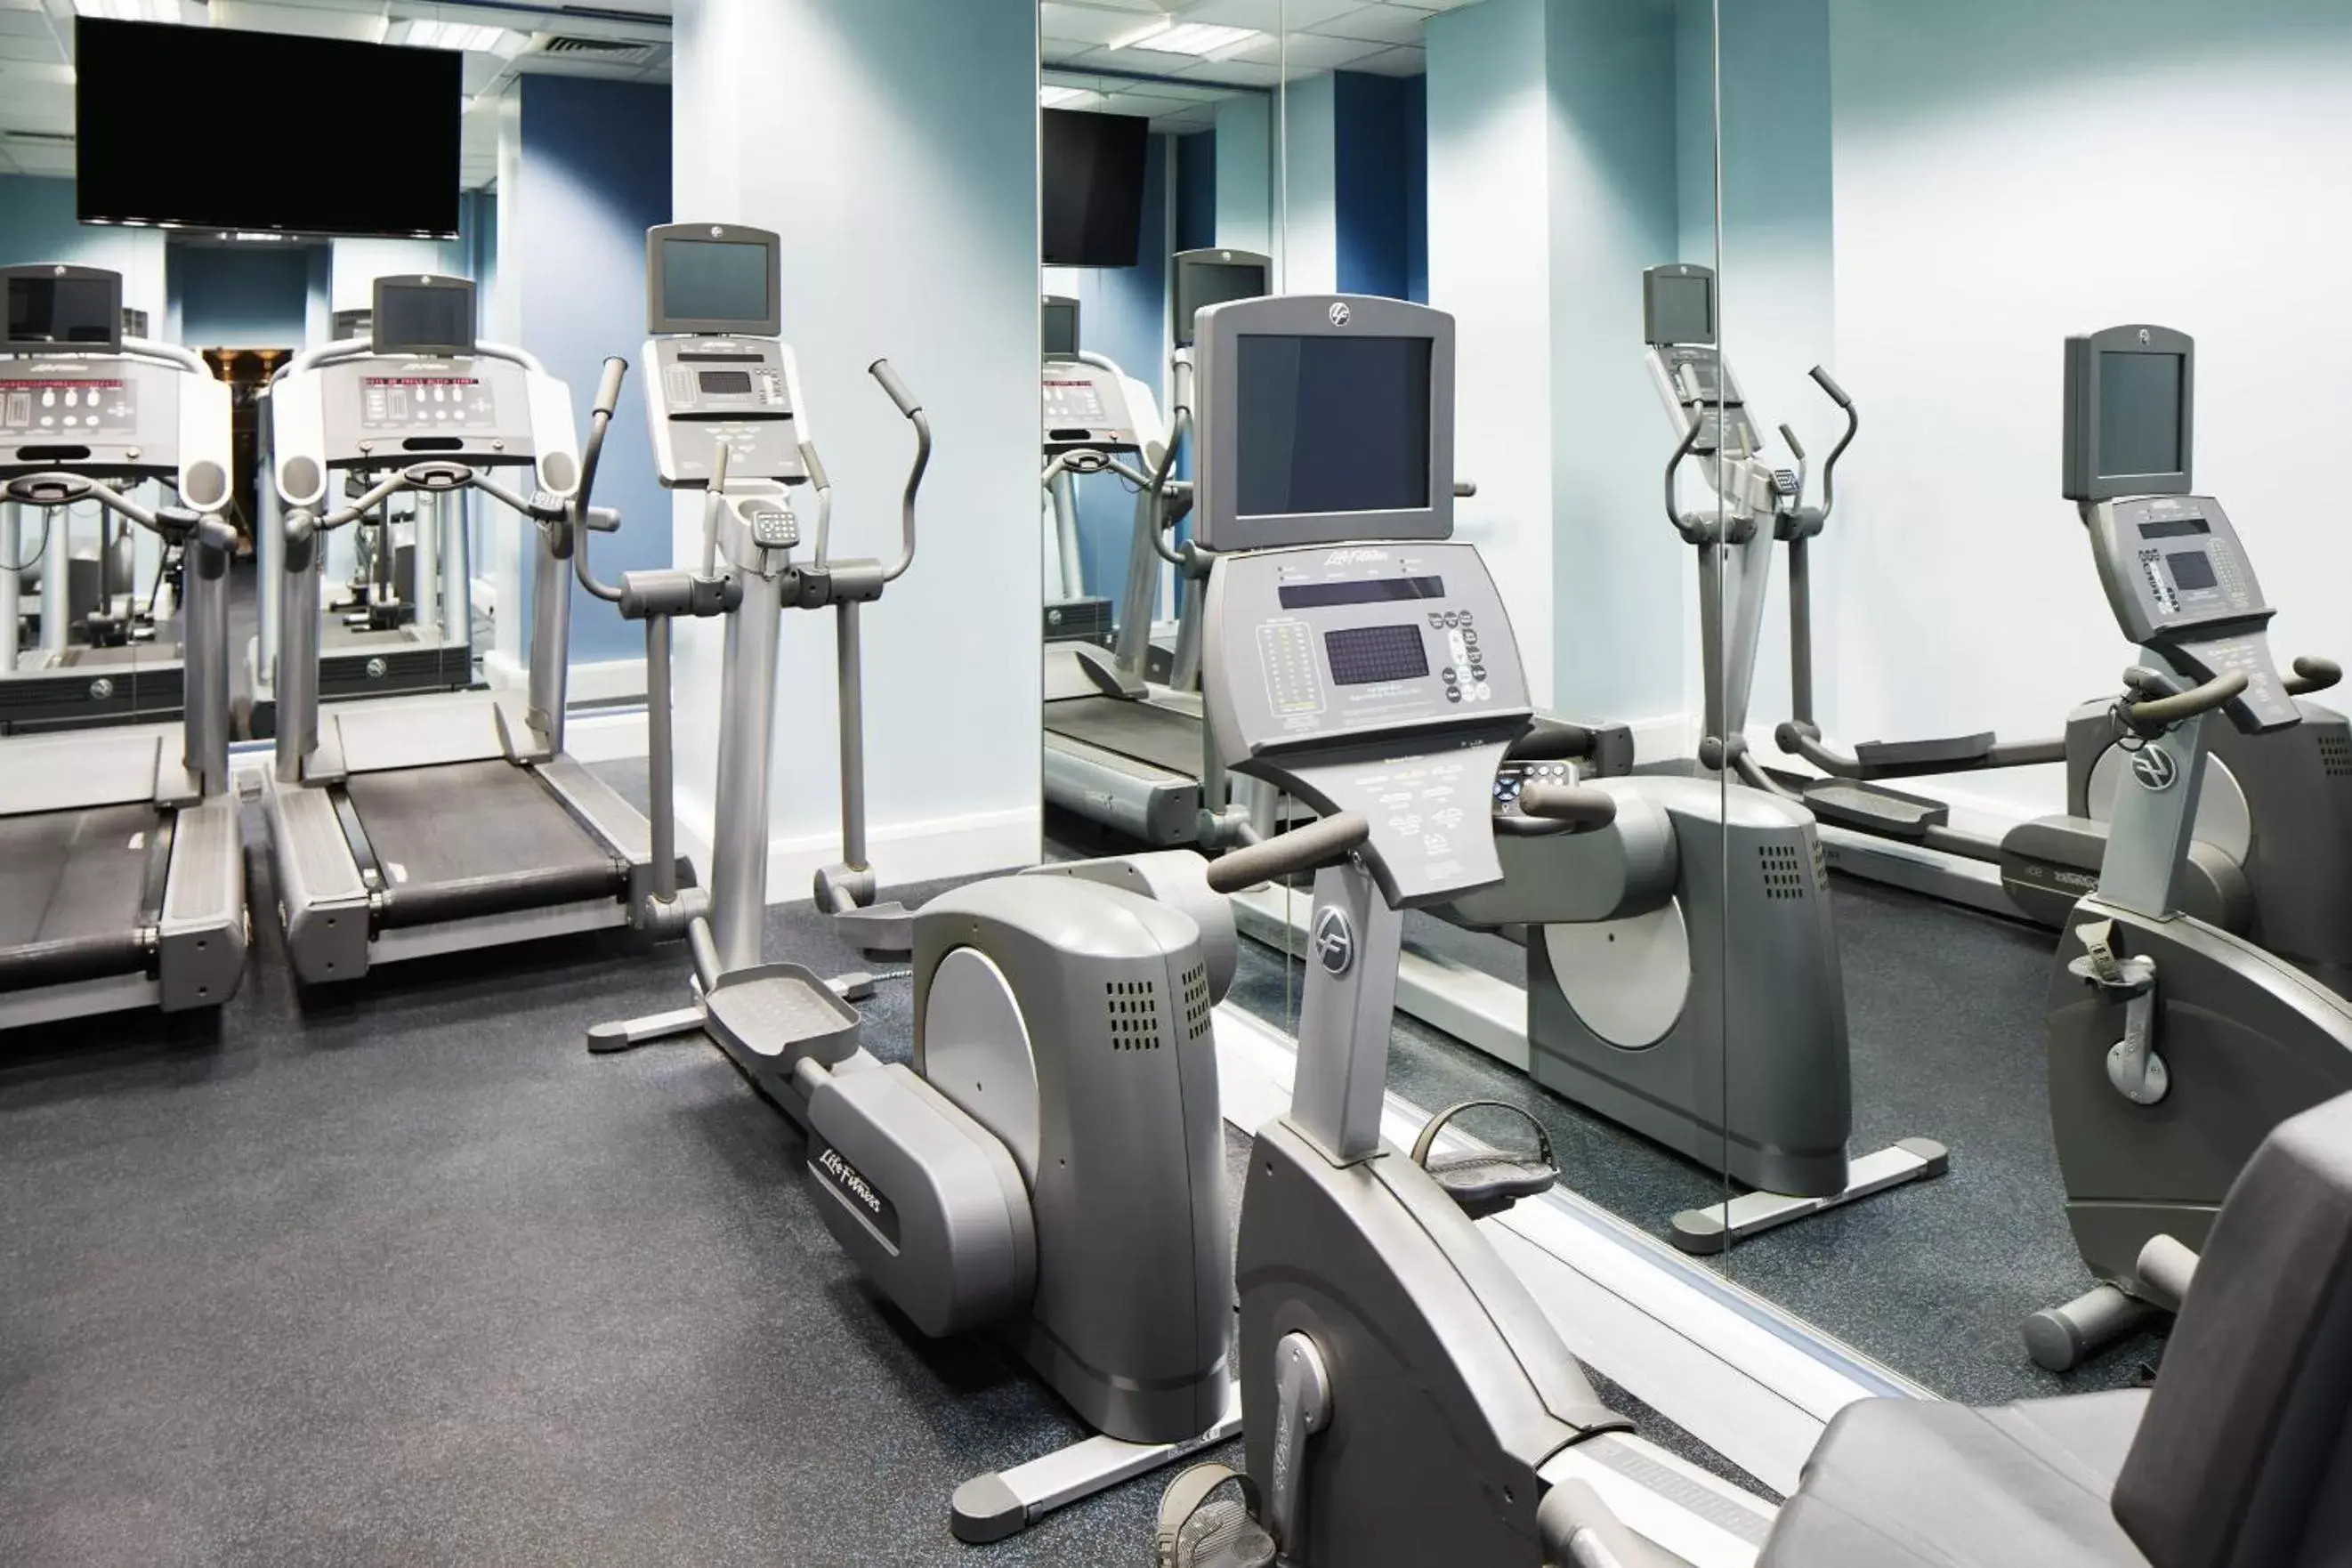 Fitness centre/facilities, Fitness Center/Facilities in The Grand at Trafalgar Square